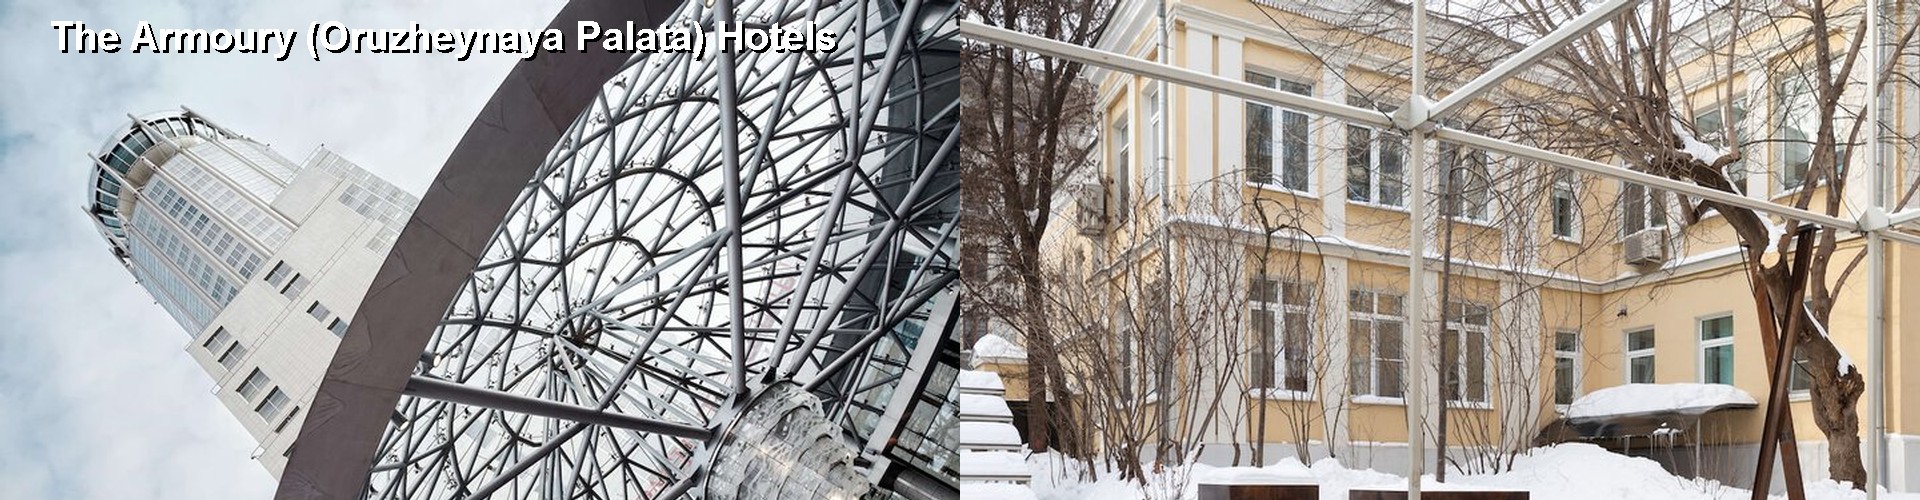 5 Best Hotels near The Armoury (Oruzheynaya Palata)